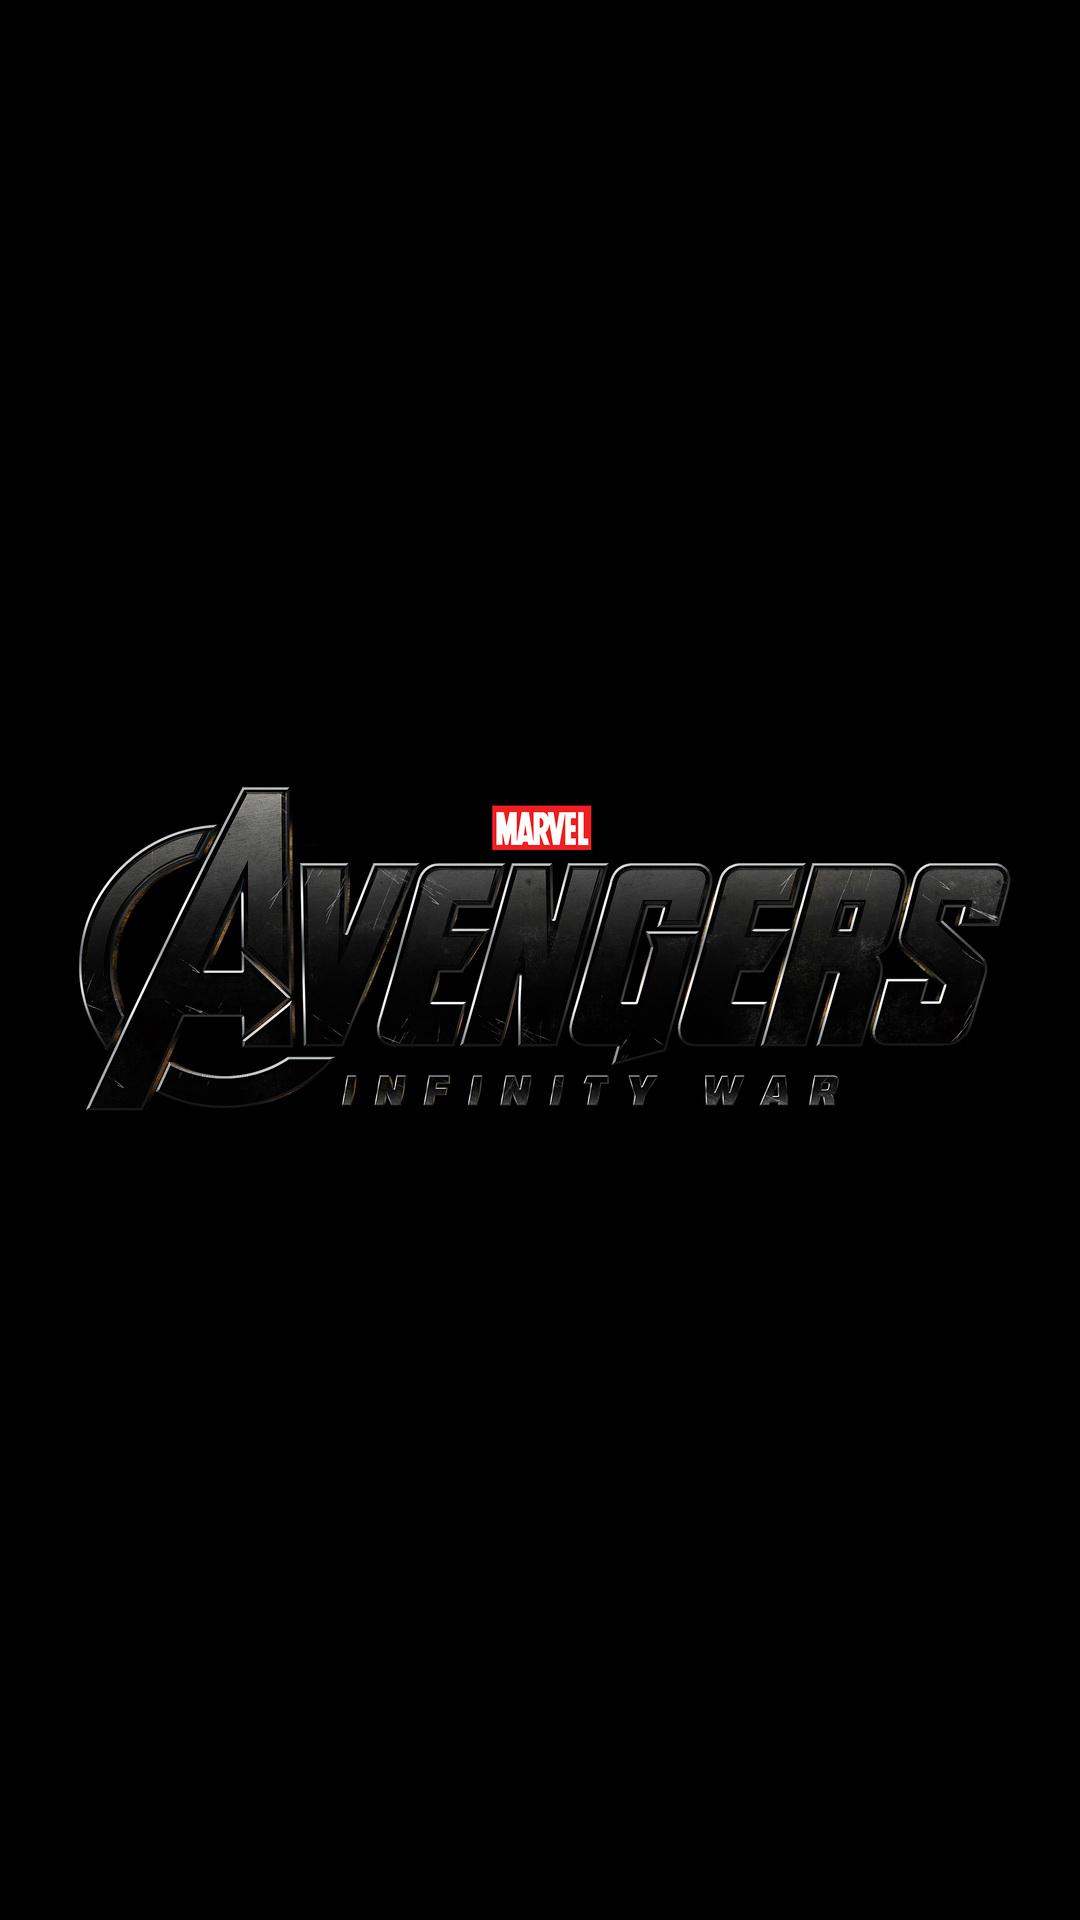 Avengers Infinity War logo 4k wallpaper